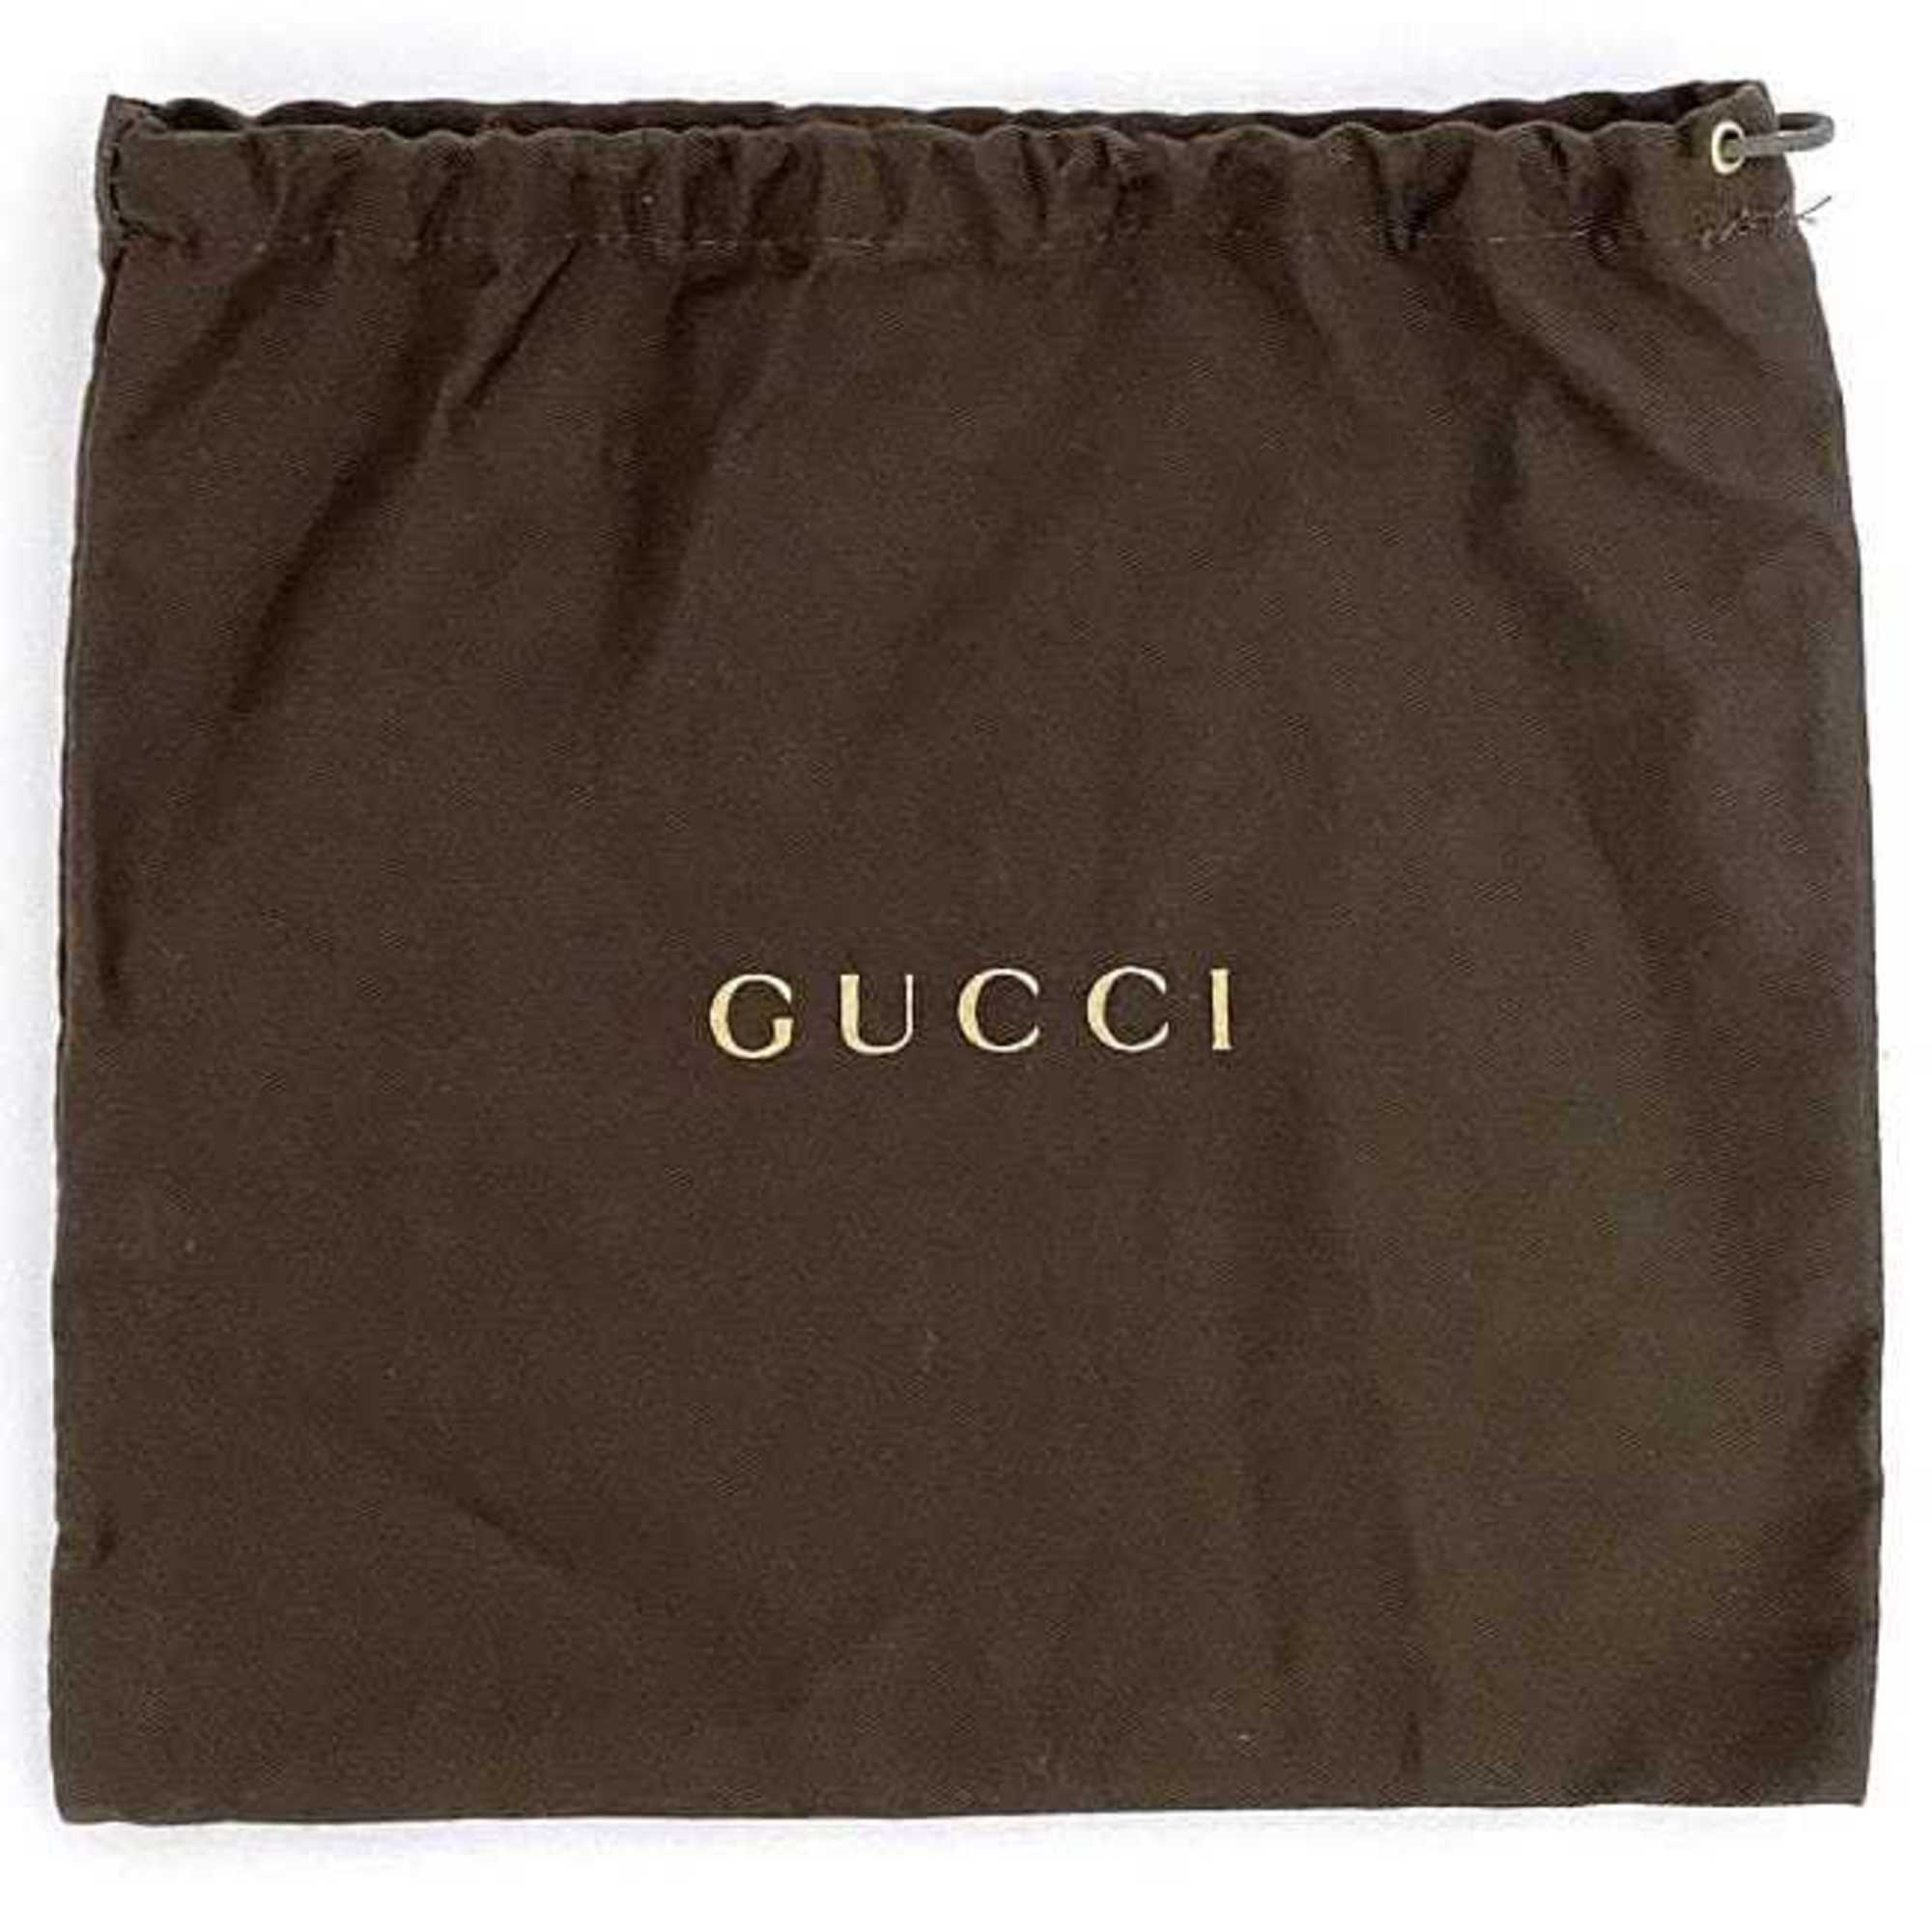 Gucci Belt Black 201766 ec-20330 30mm Leather 1766 GUCCI Waist 90cm Men's